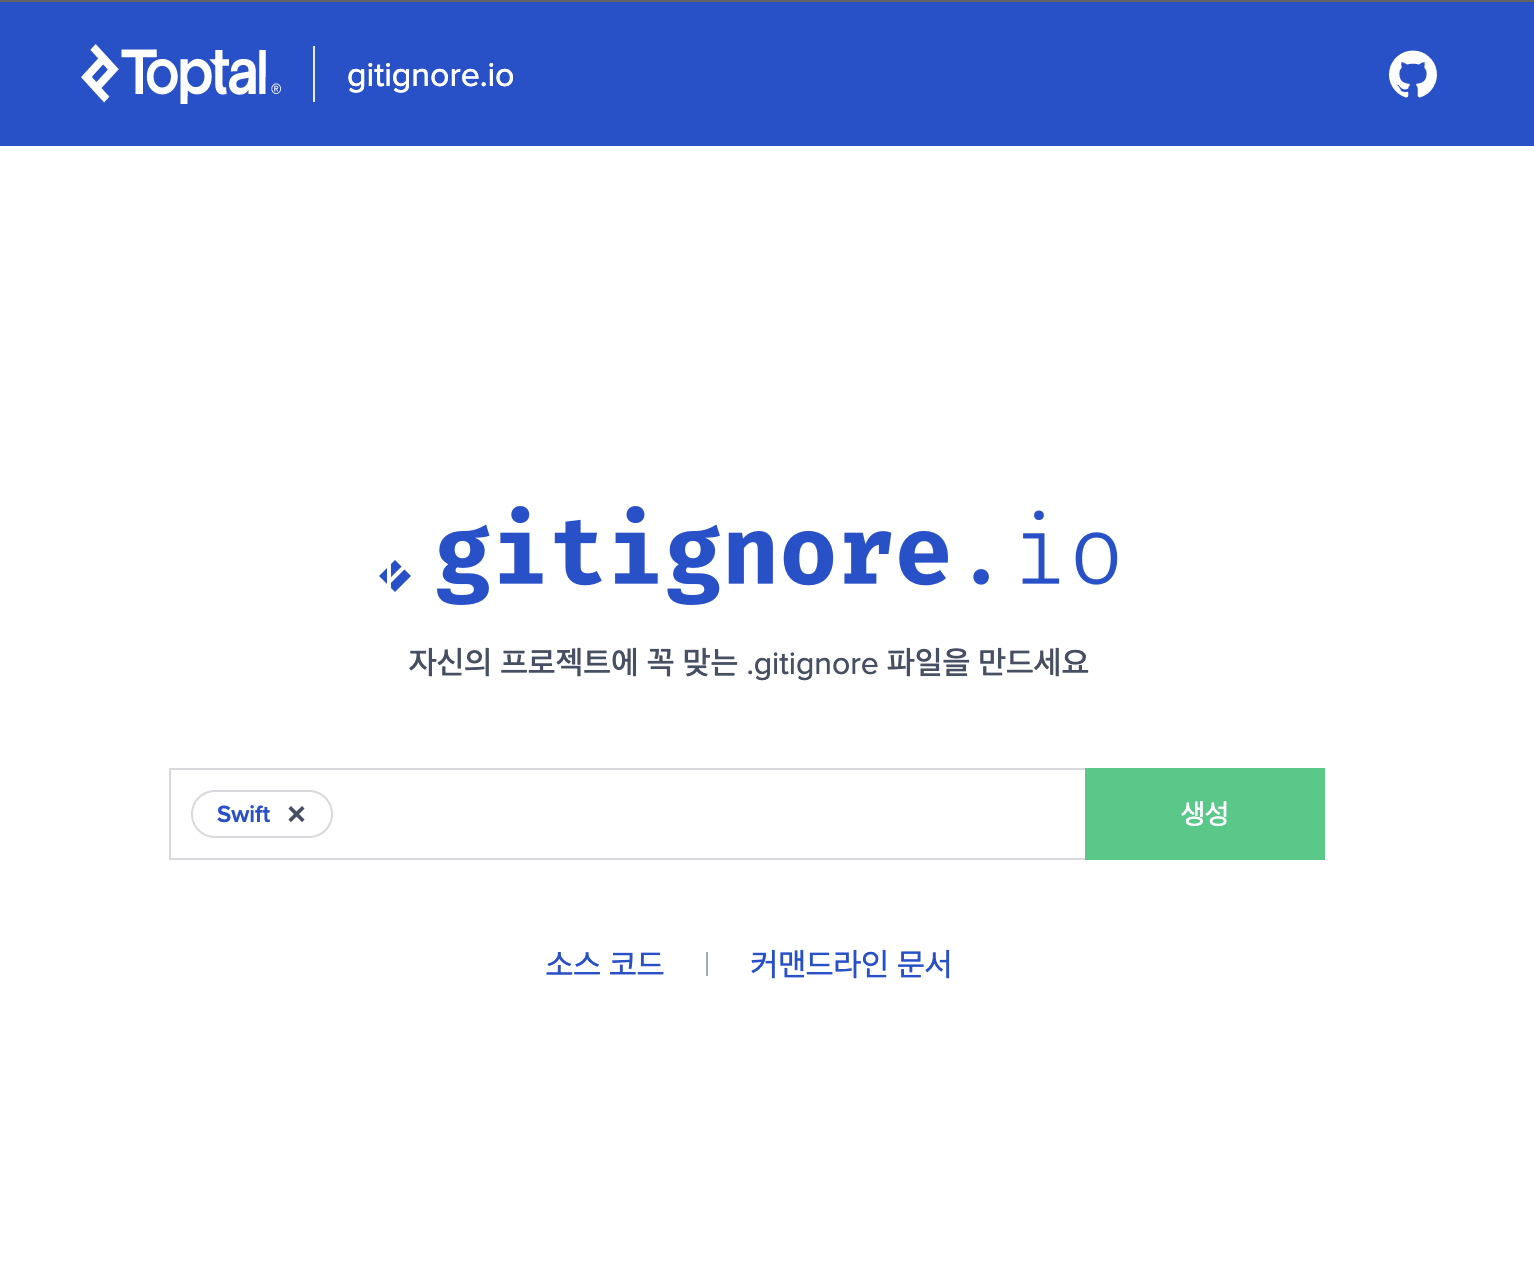 gitignore.io 페이지에서 Swift 템플릿 검색 후 해당 내용 복사하여 프로젝트 폴더에 .gitignore 파일 생성 후 붙여넣기